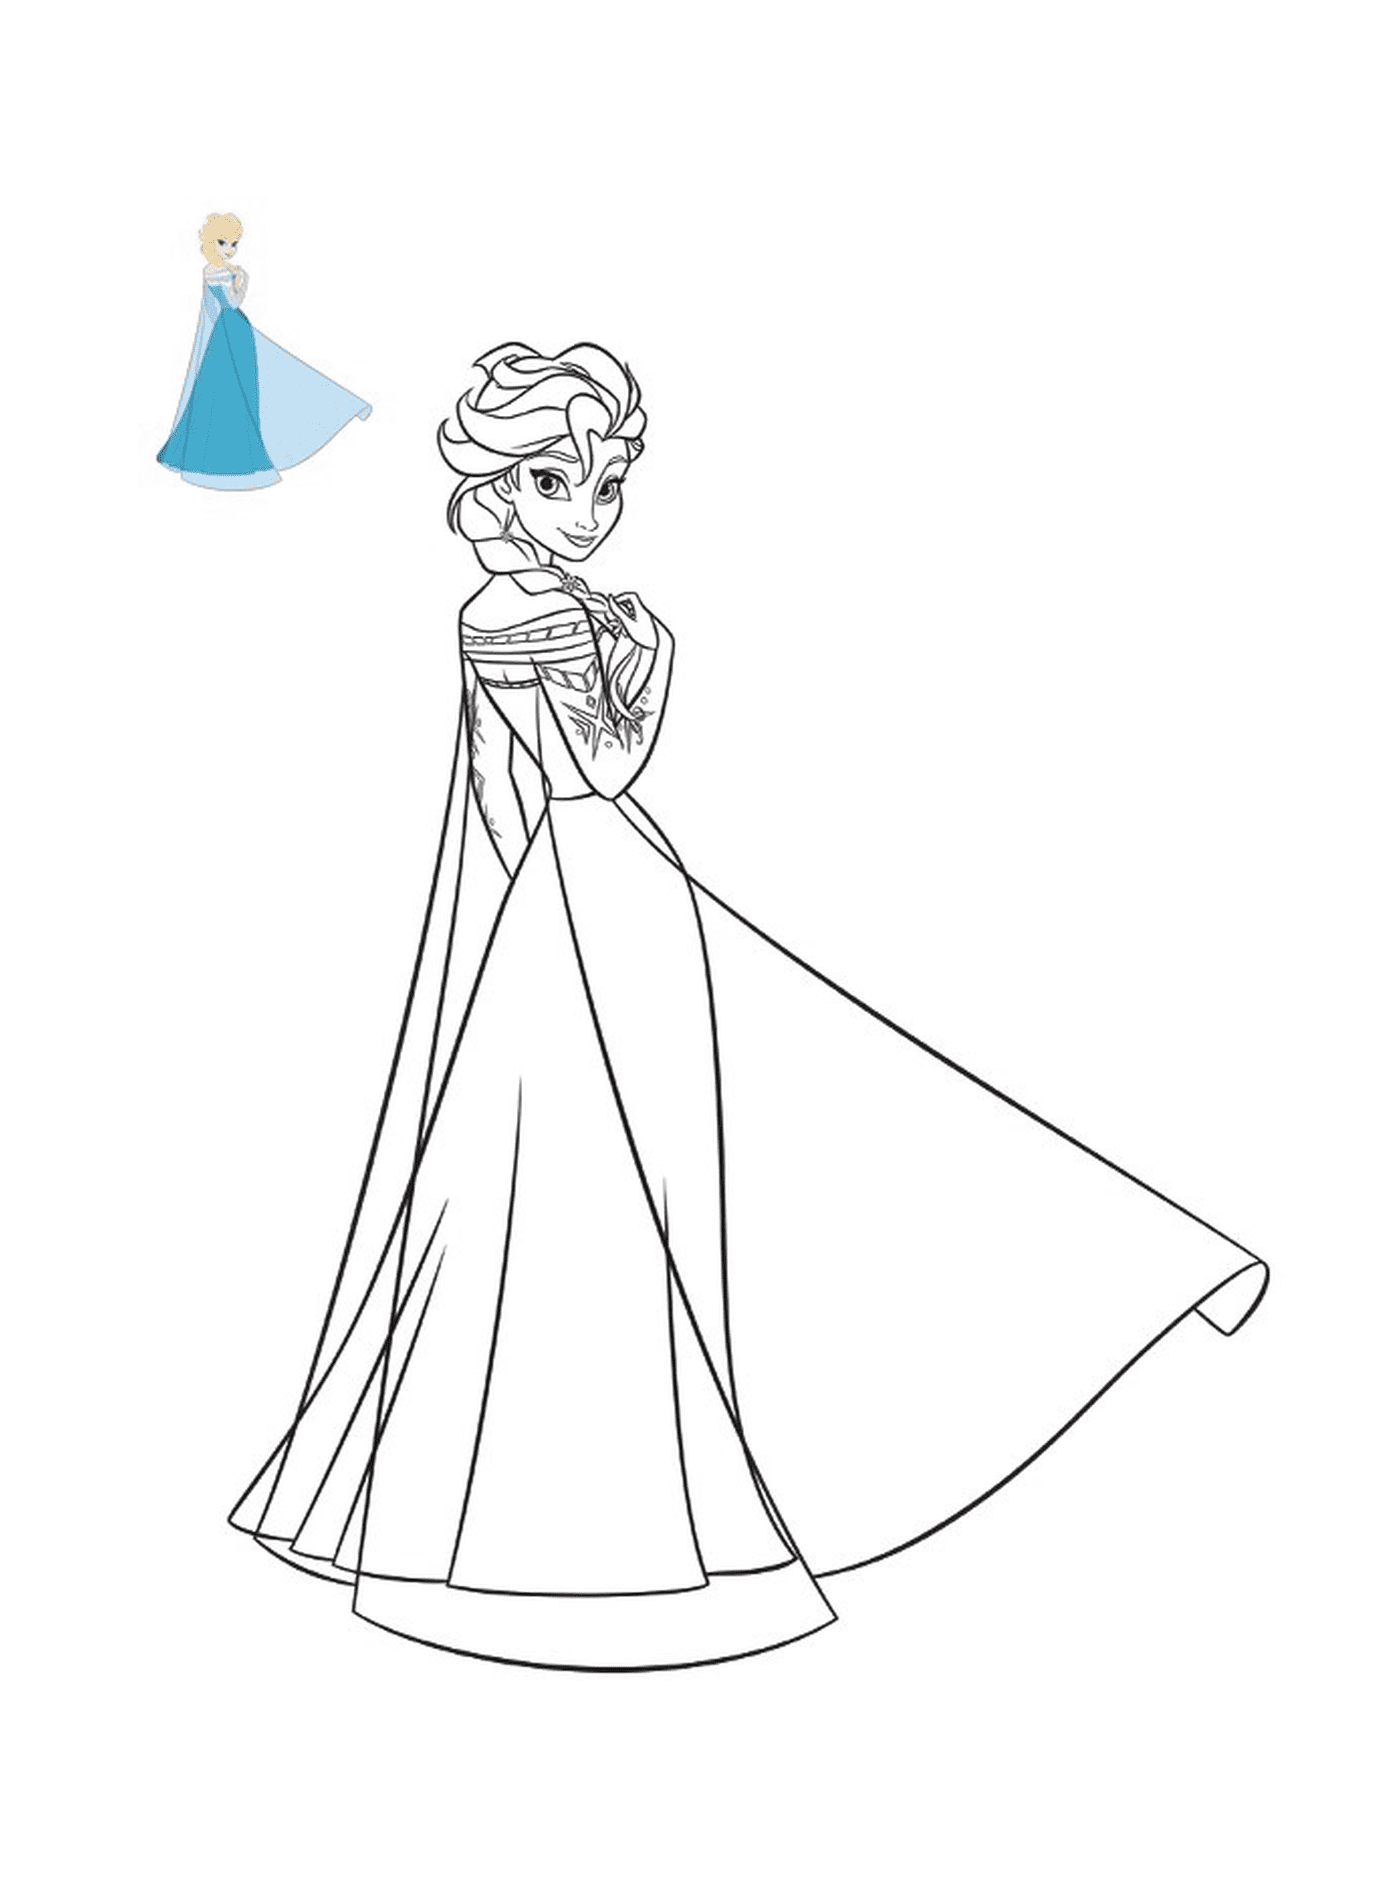  La reina de la nieve Elsa en vestido de princesa, Disney 